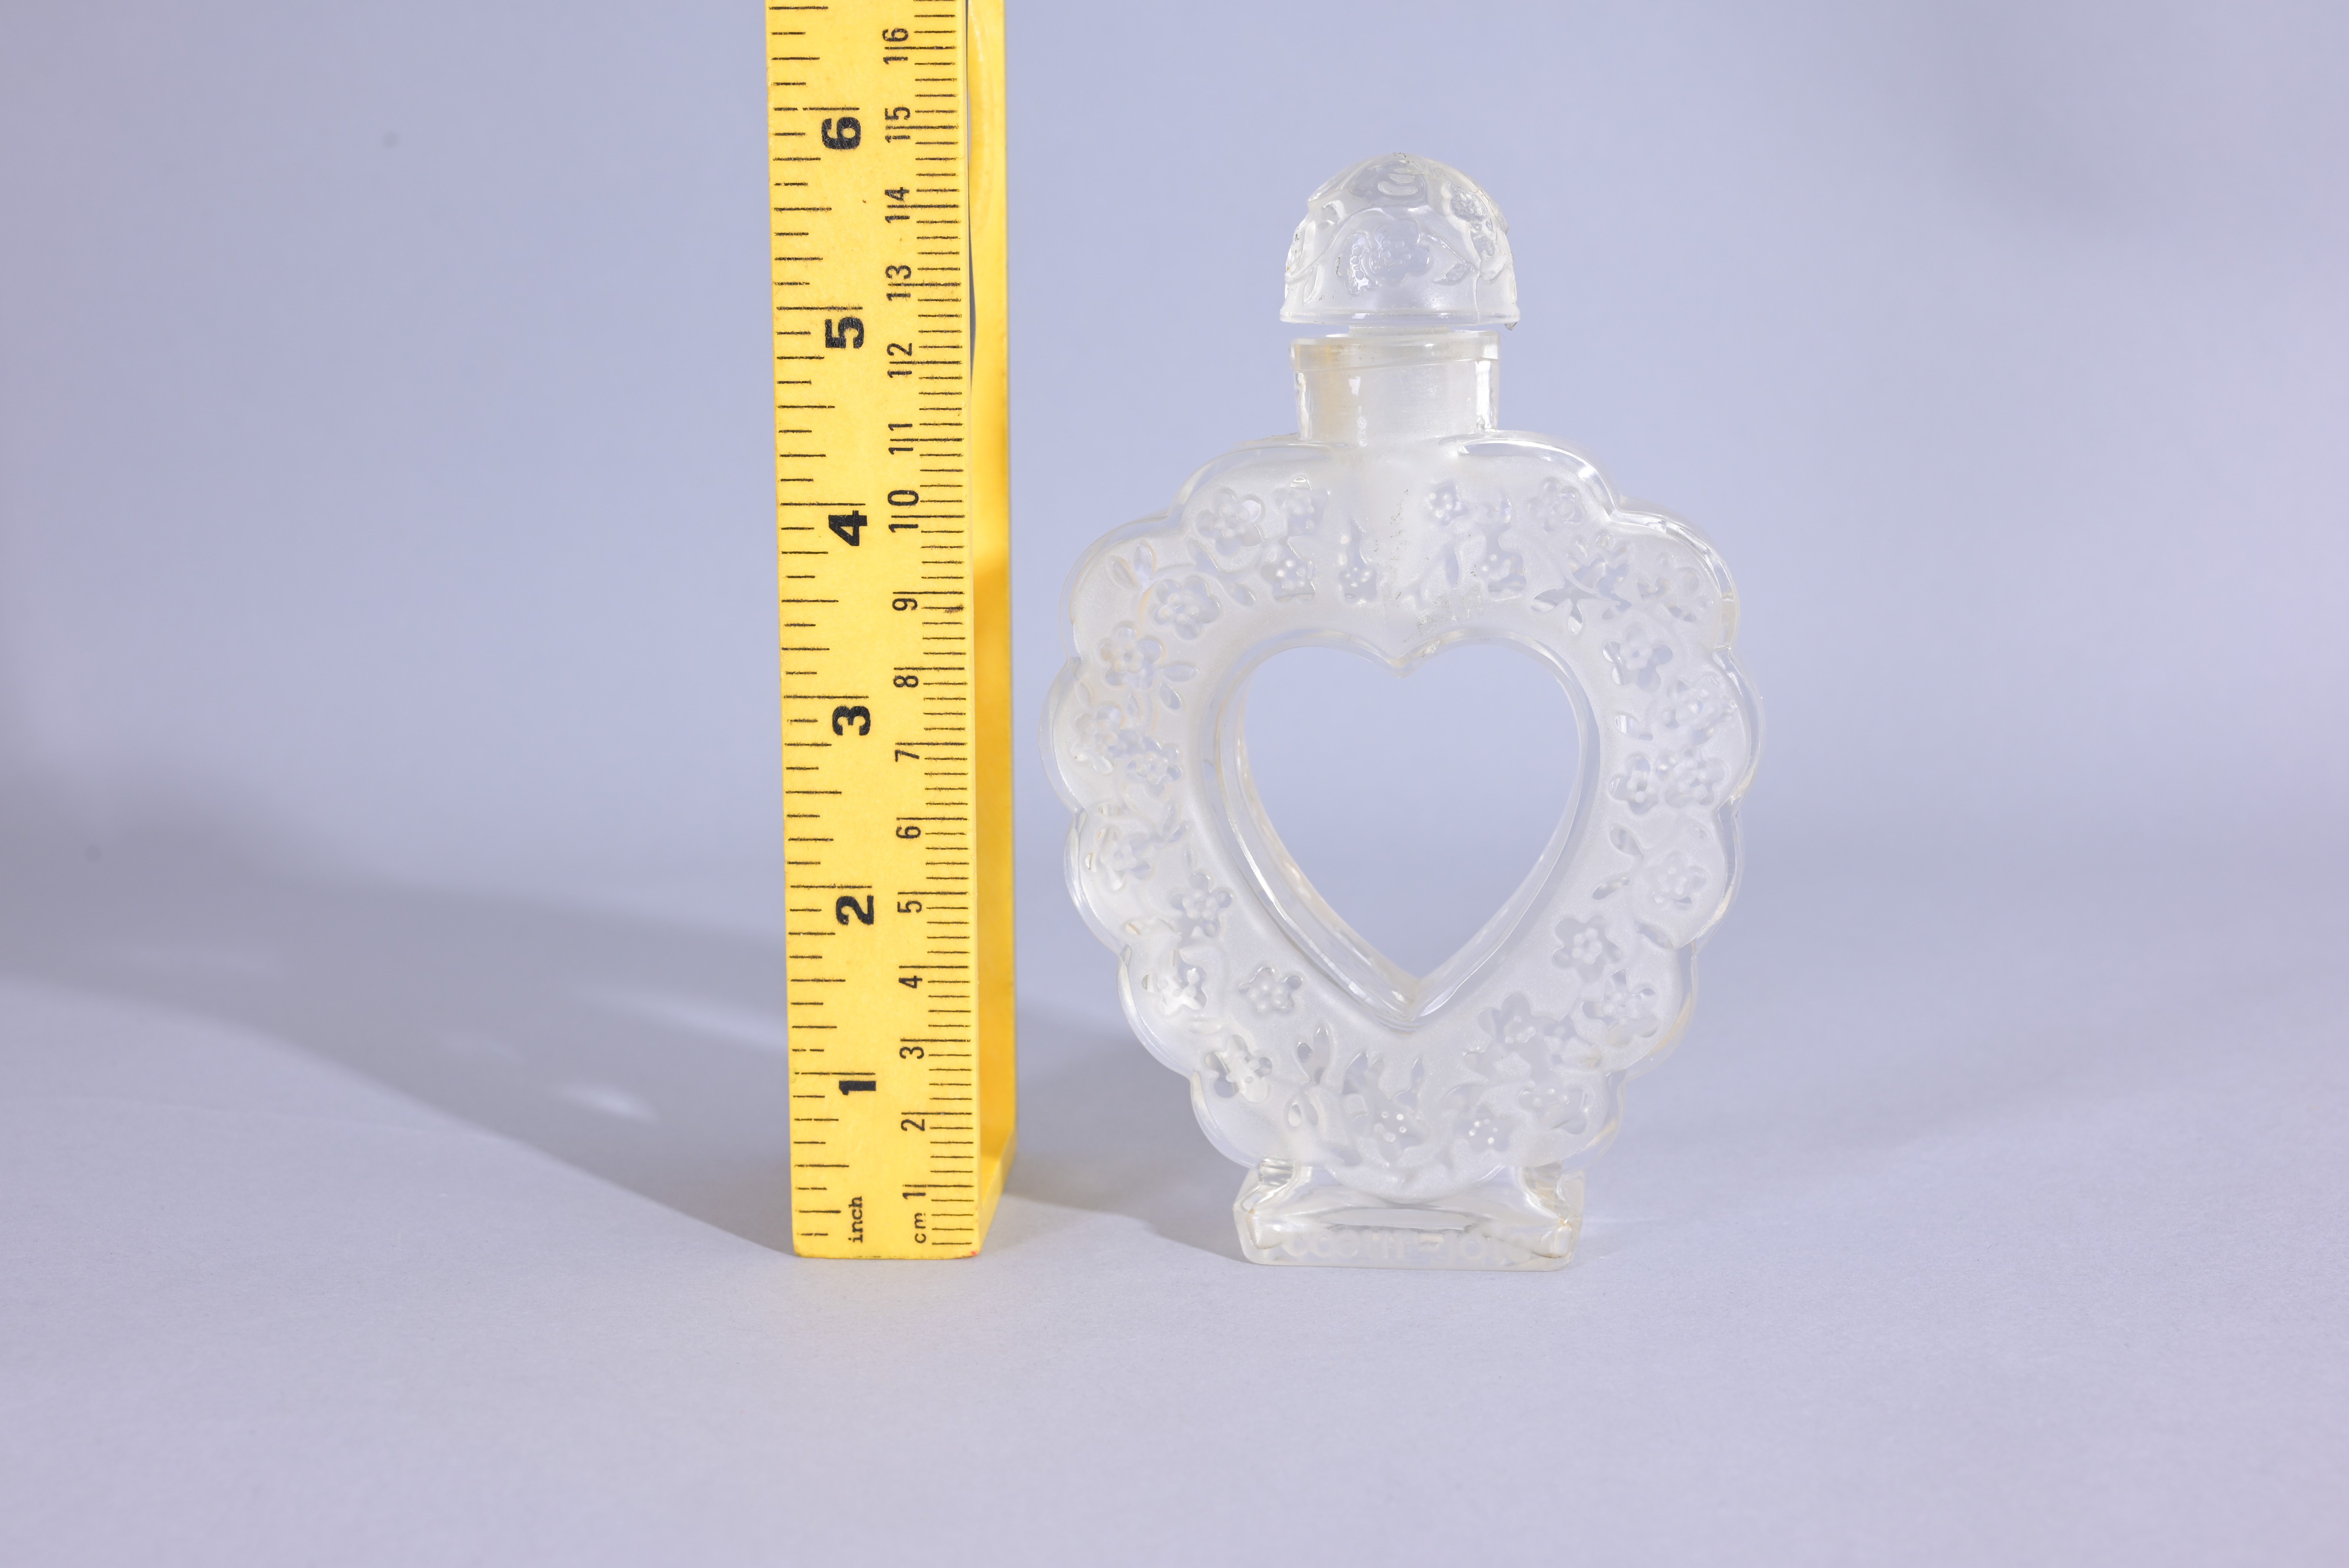 Lalique - Coeur Joie - Nina Ricci Perfume - Image 9 of 10